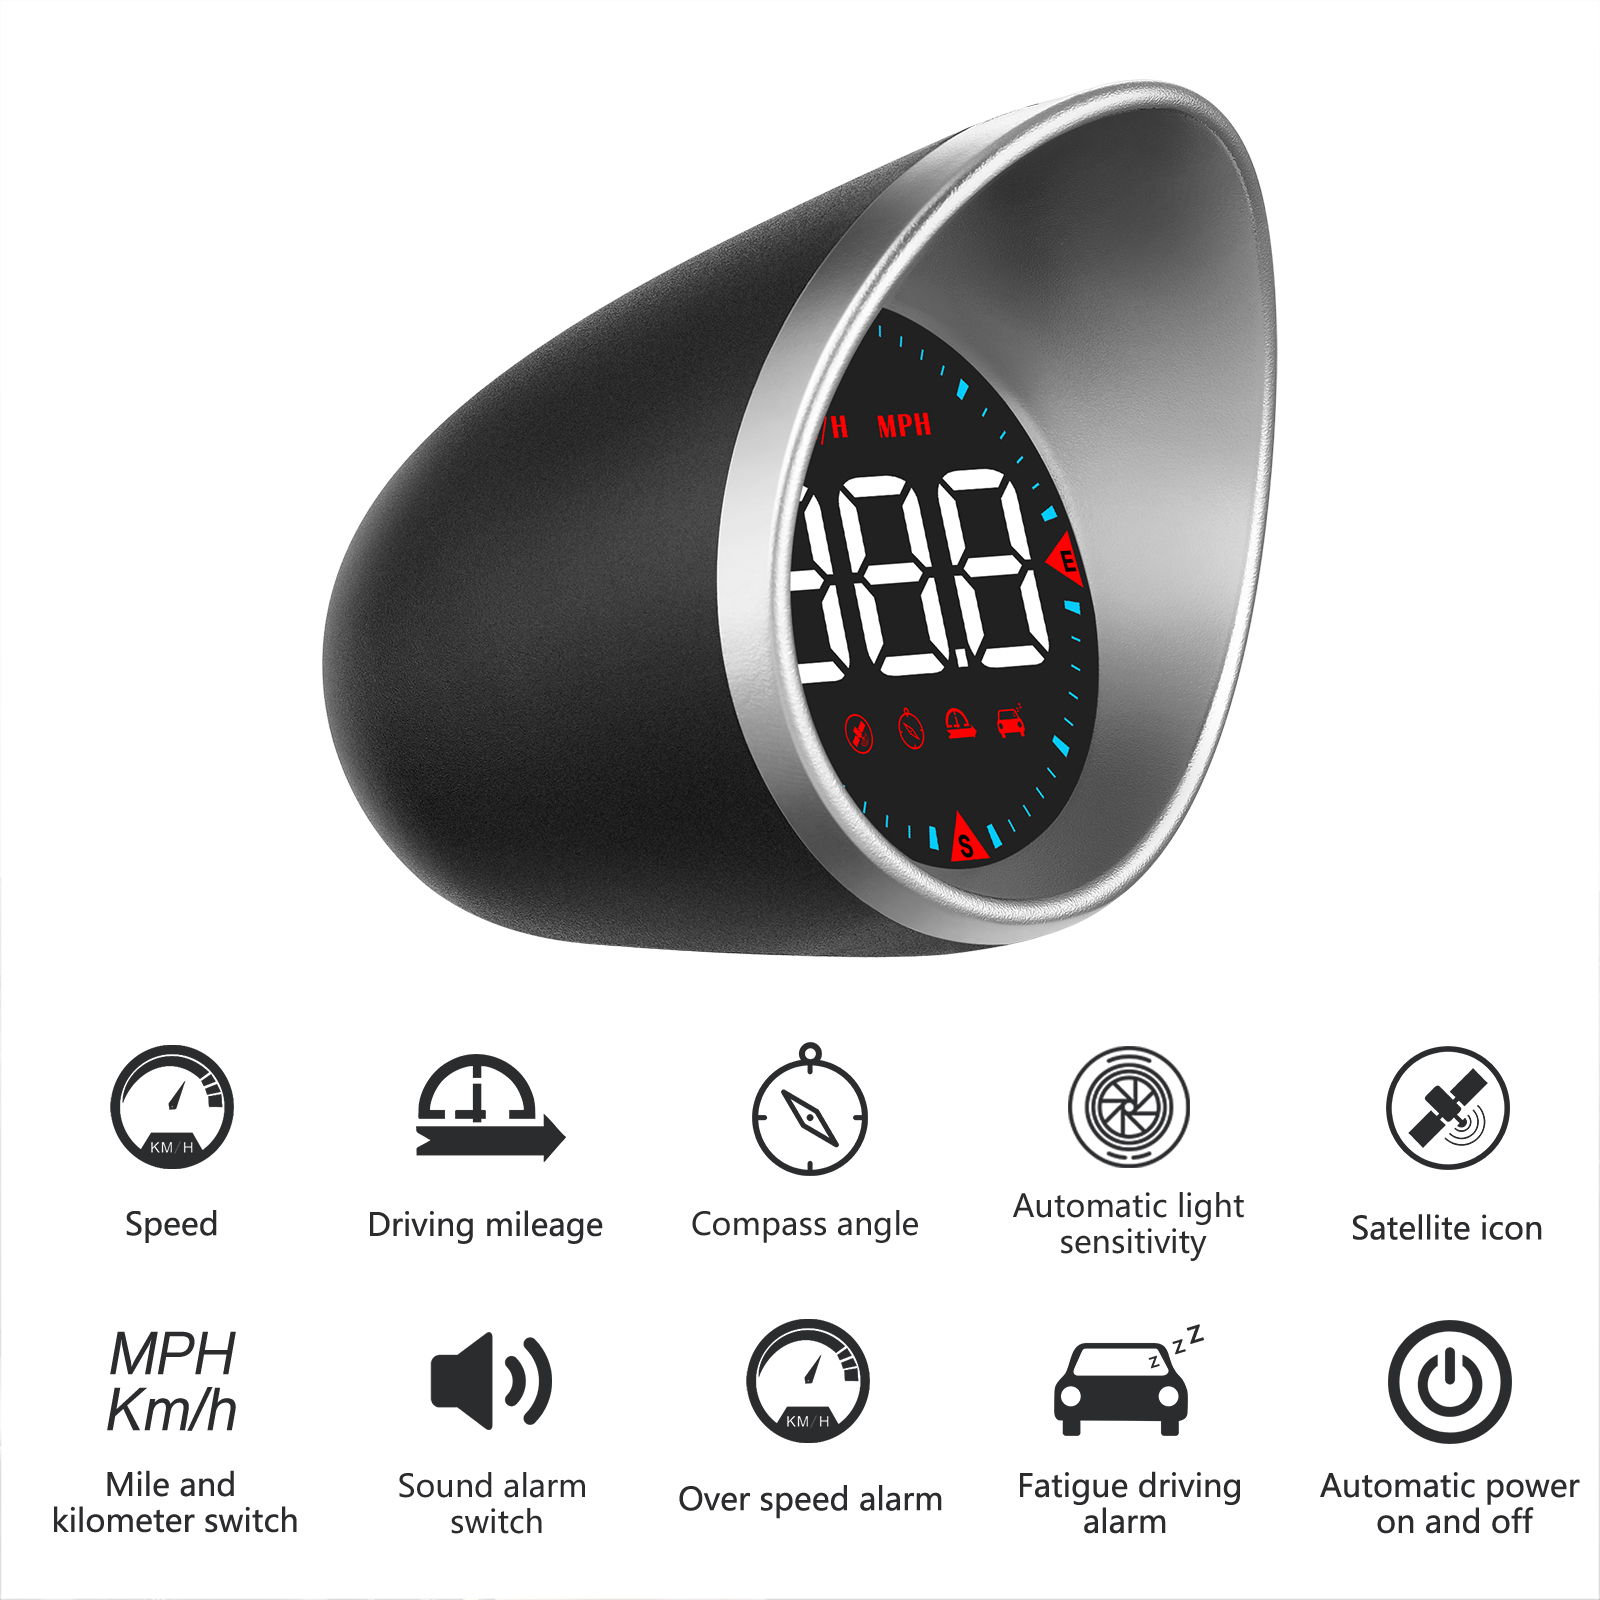 wiiyii Universal Car HUD Head Up Display T900, with Satellite Clock, S